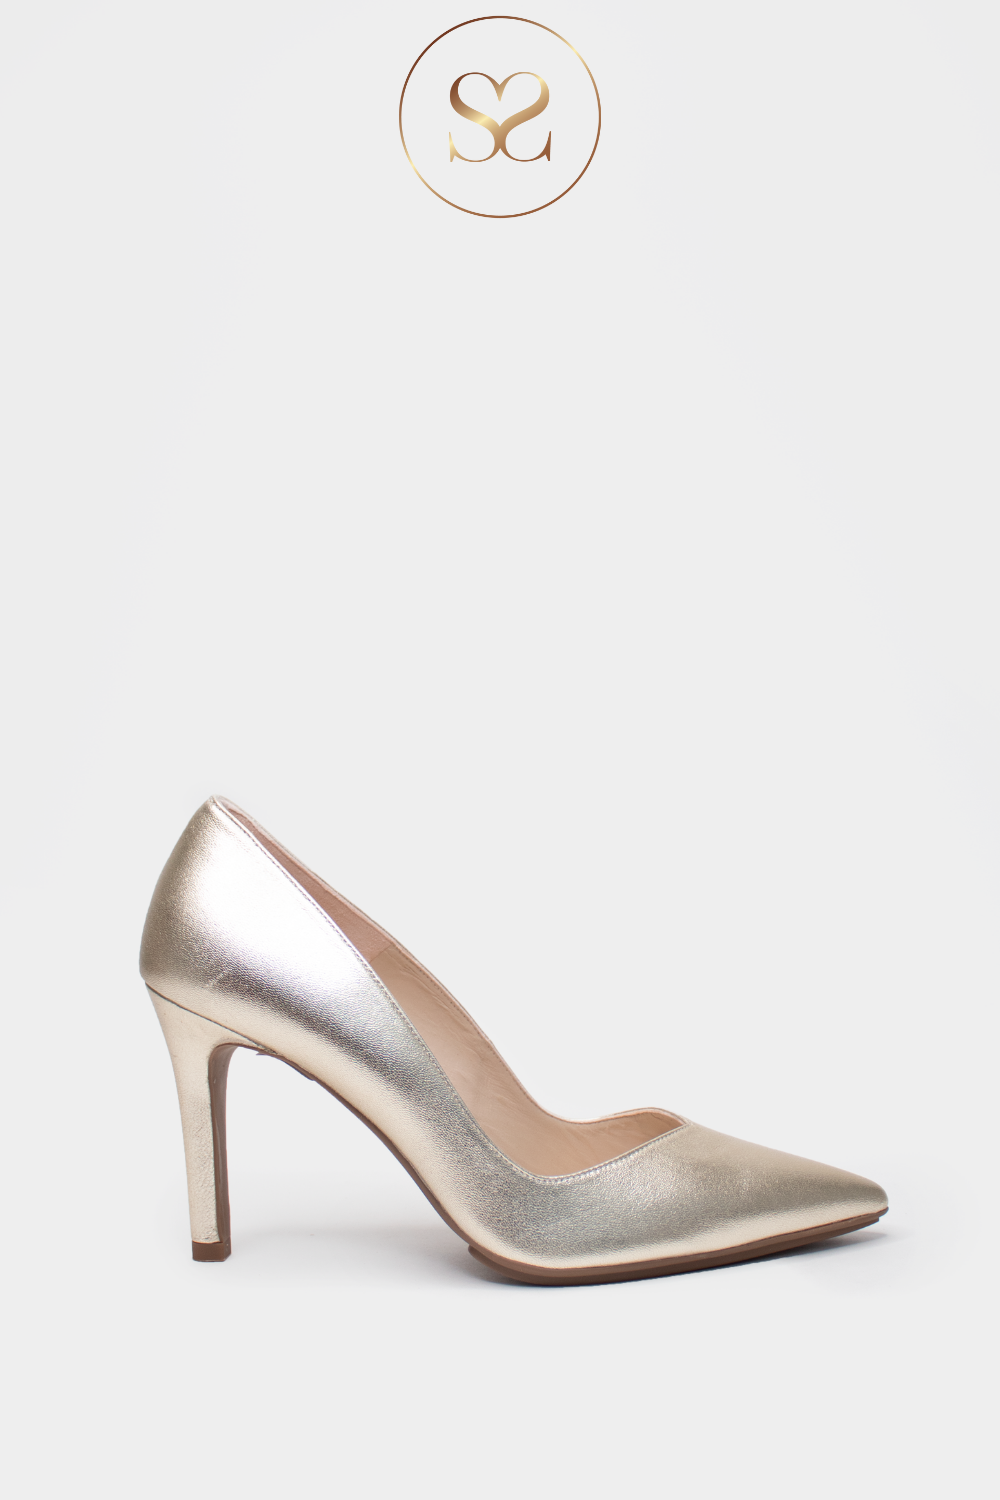 IRREGULAR CHOICE CLASSY Kate Black Court High Heel Shoes Size 5 £19.99 -  PicClick UK